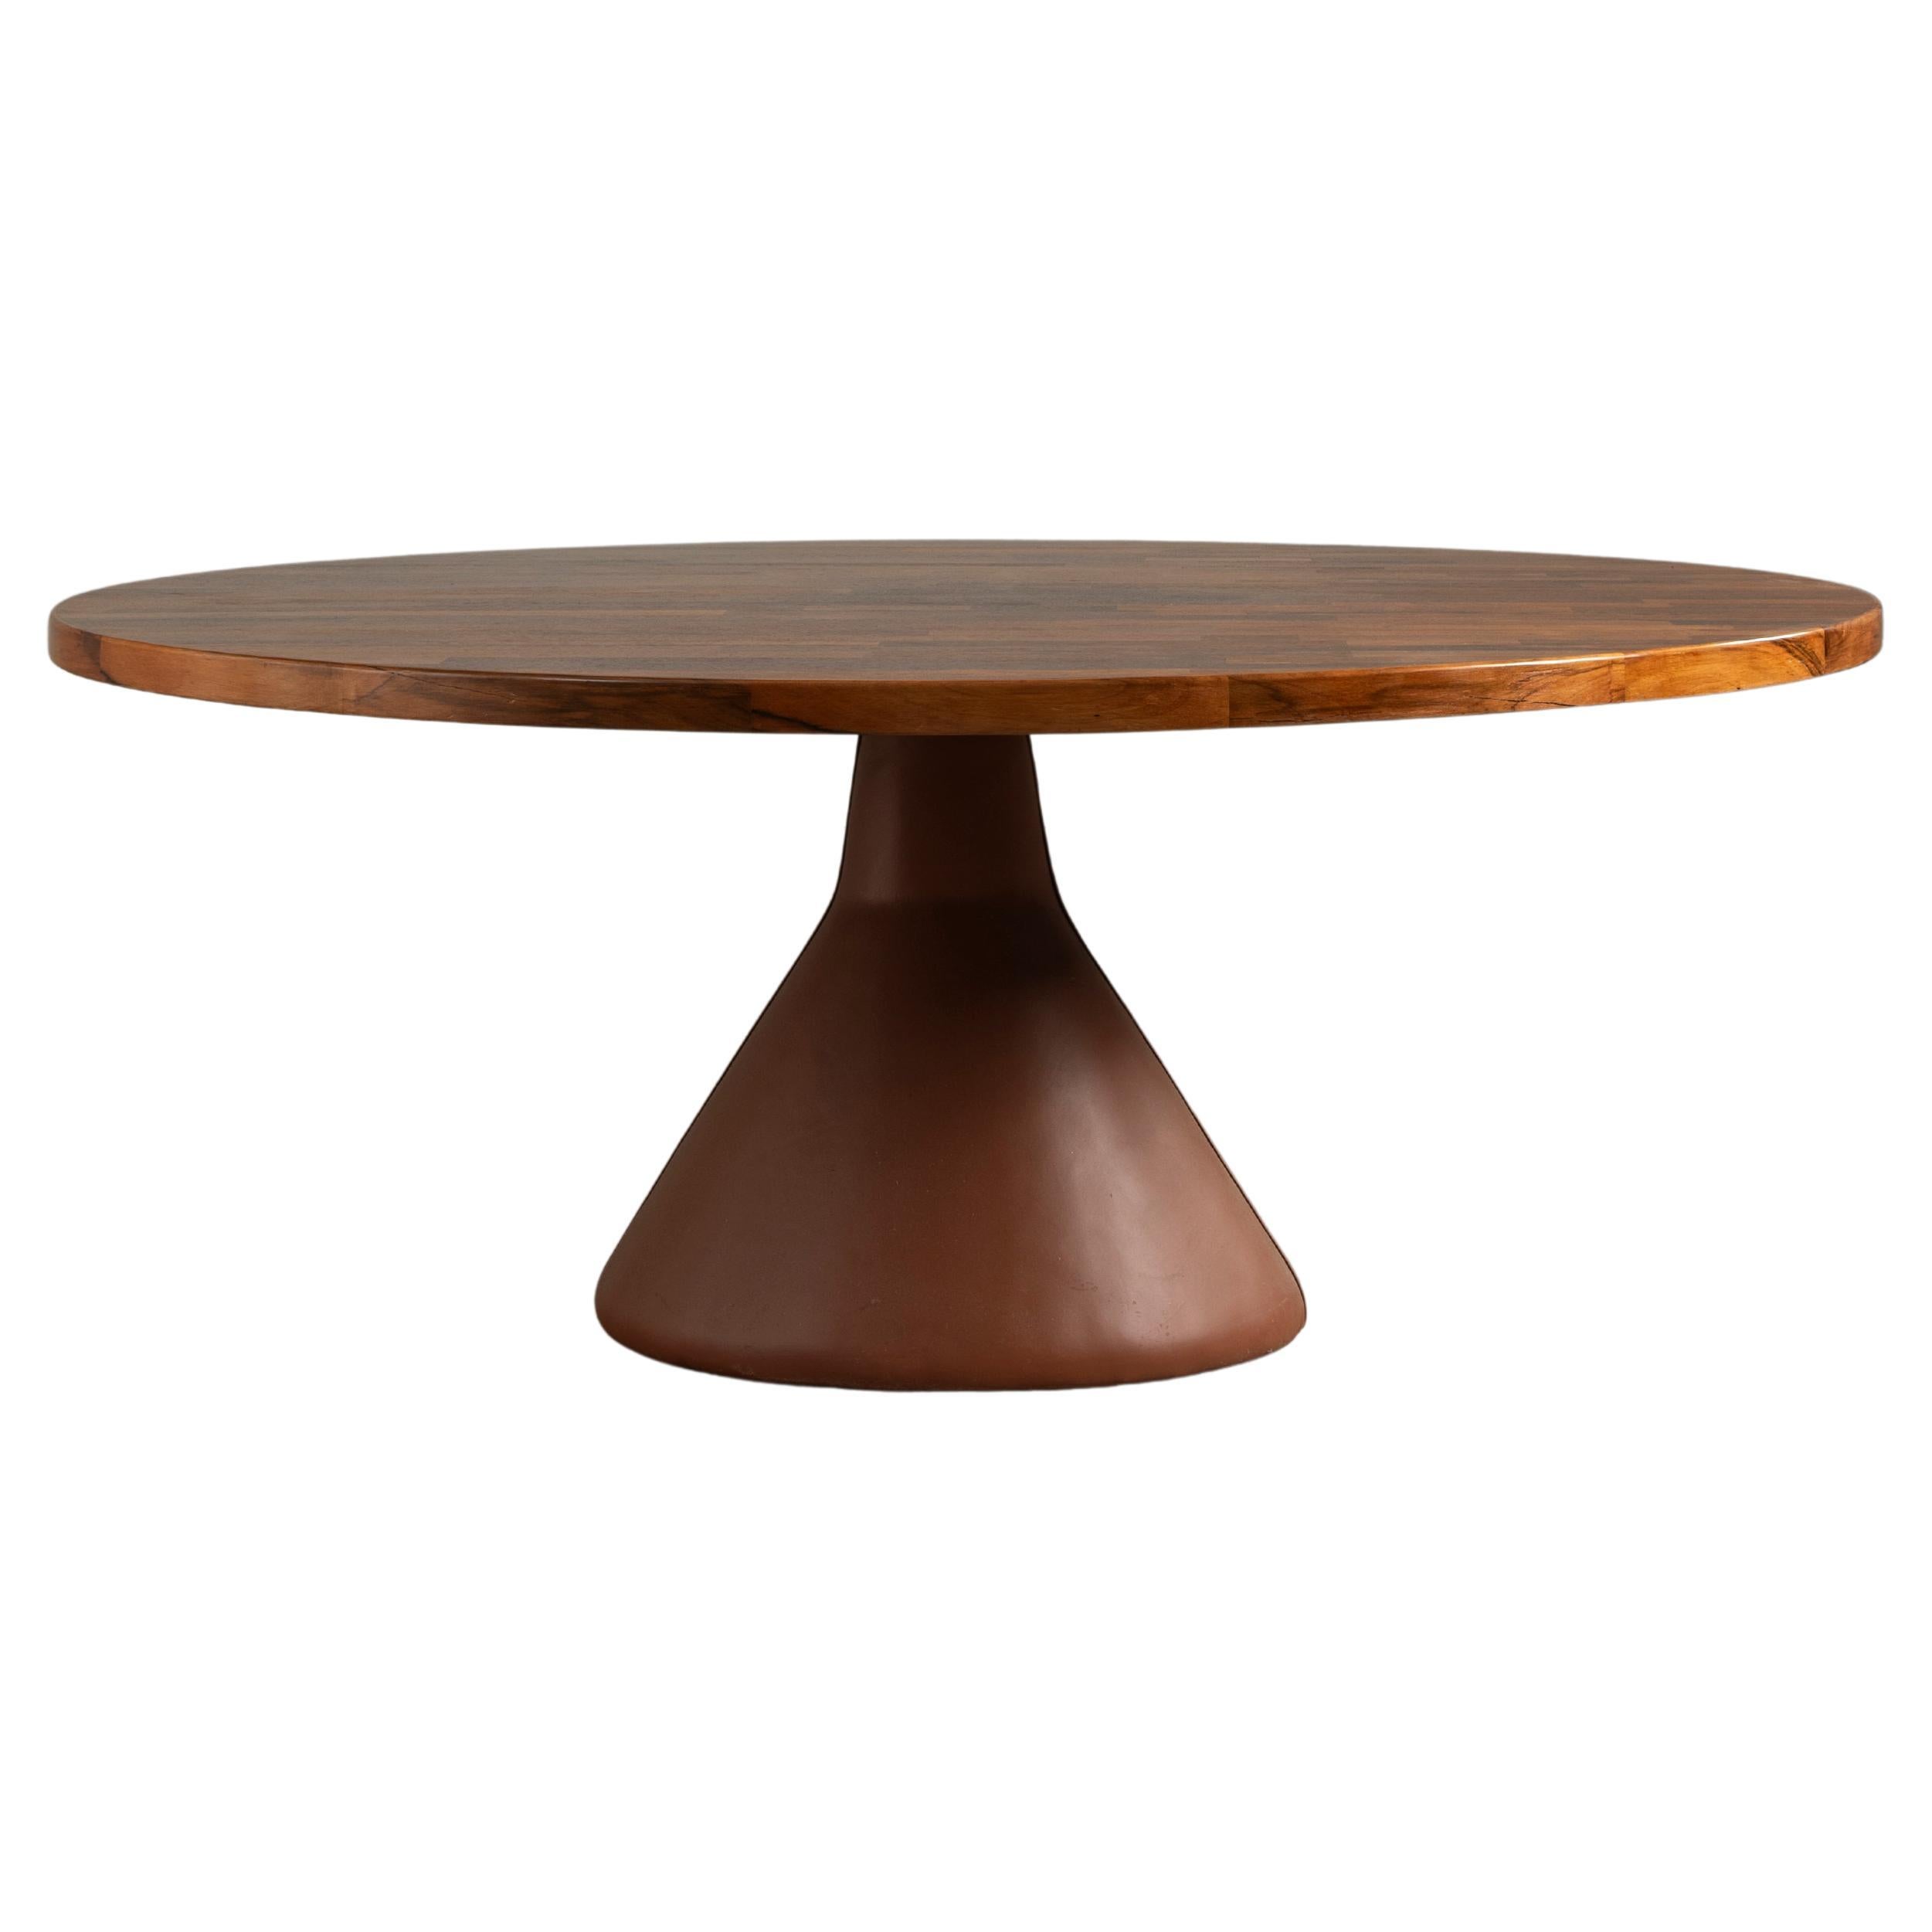 'Guarujá' Dining Table, by Jorge Zalszupin, Brazilian Modern Design For Sale